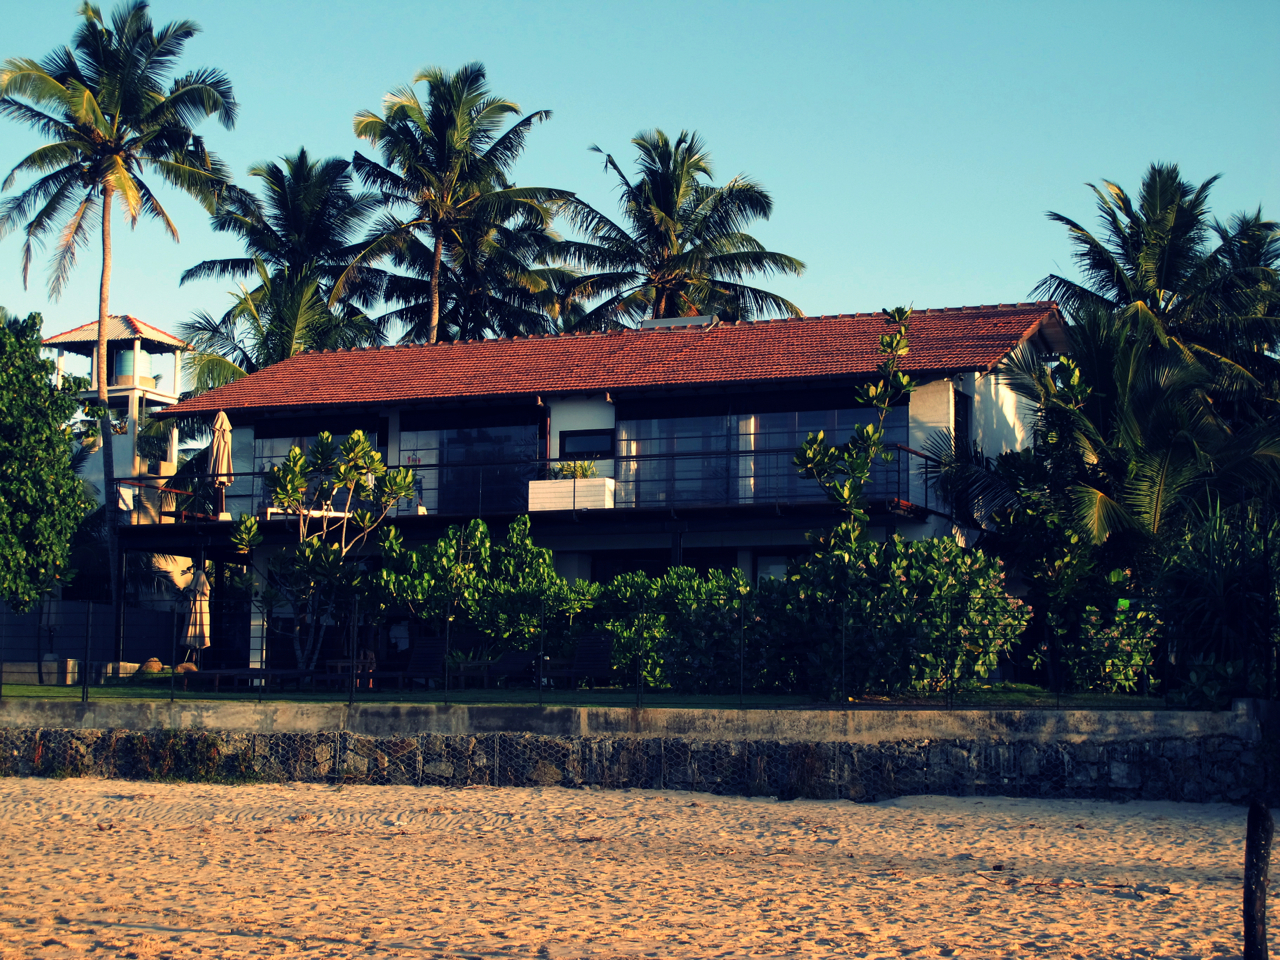 Sri Lanka Lapoint Surfcamp - Beach Villa - MartinParzer